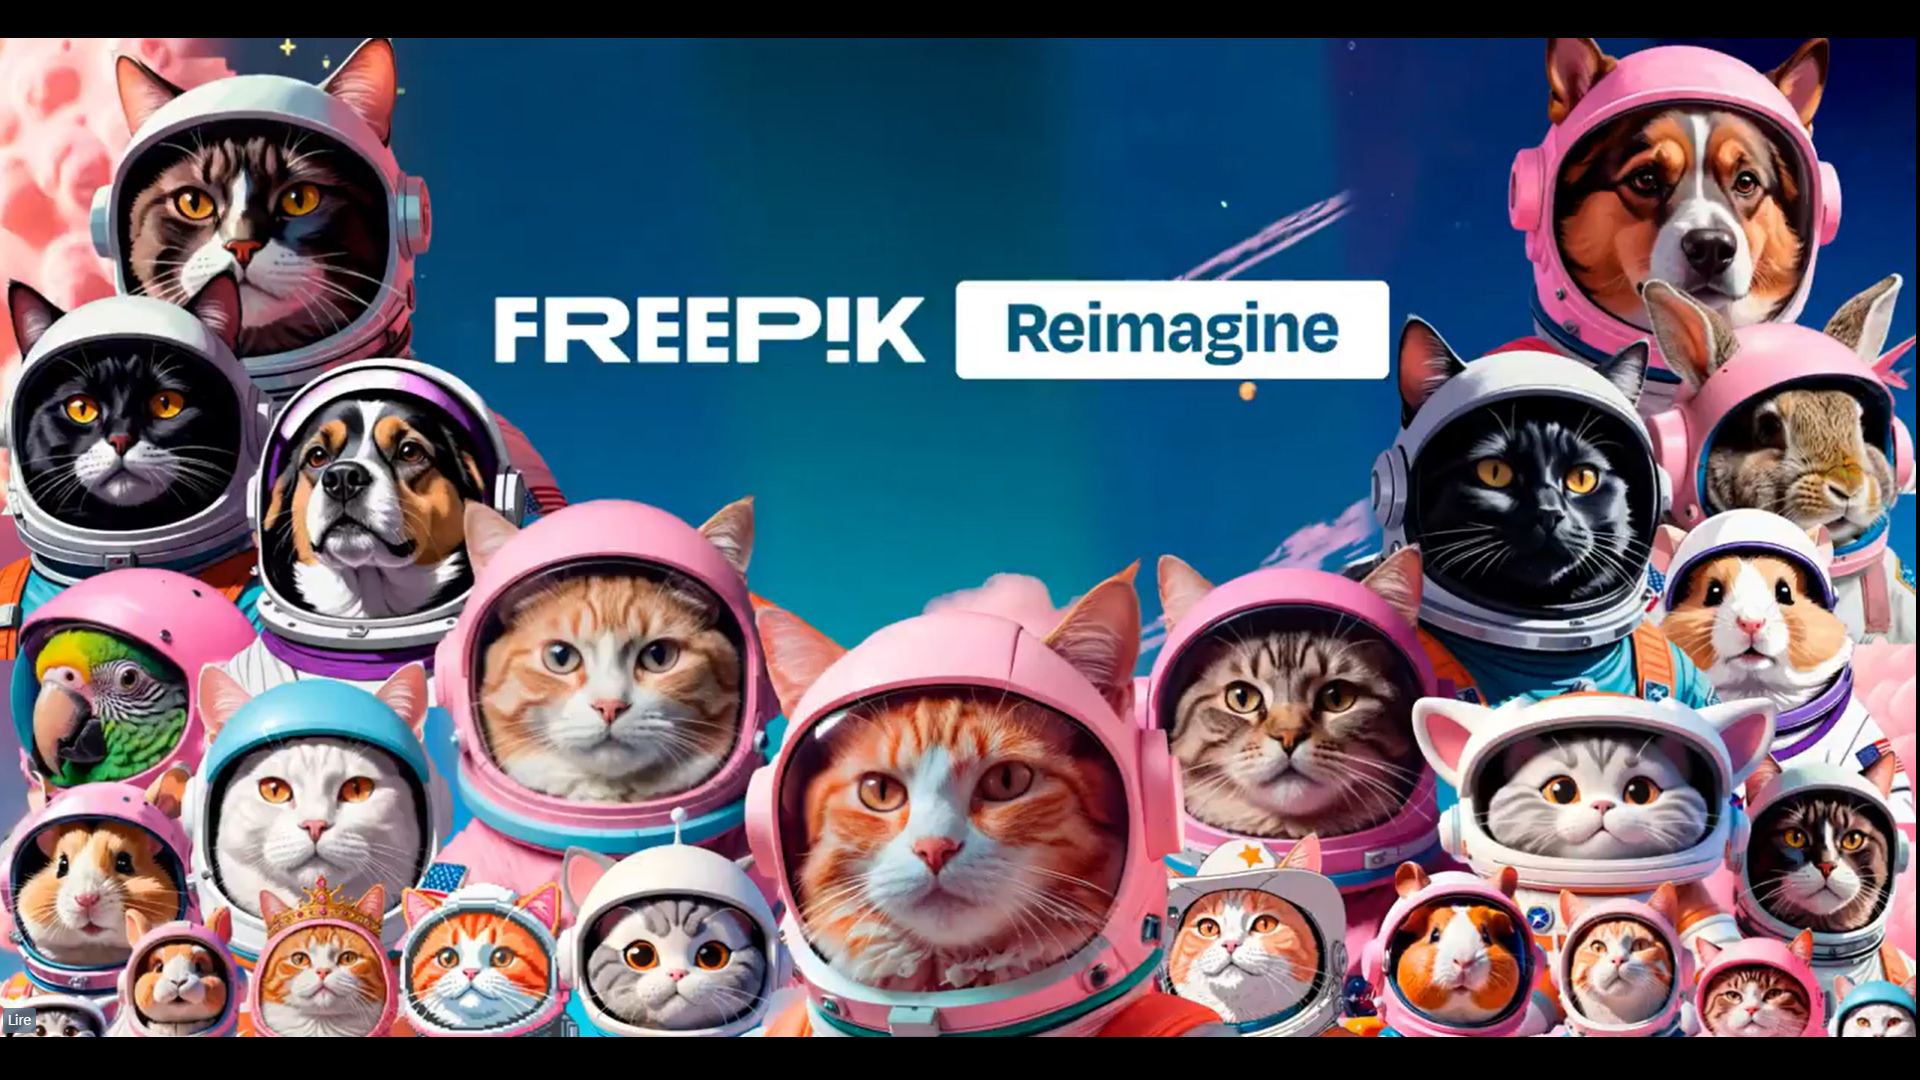 FREEPIK REIMAGINE disponible gratuitement en beta!